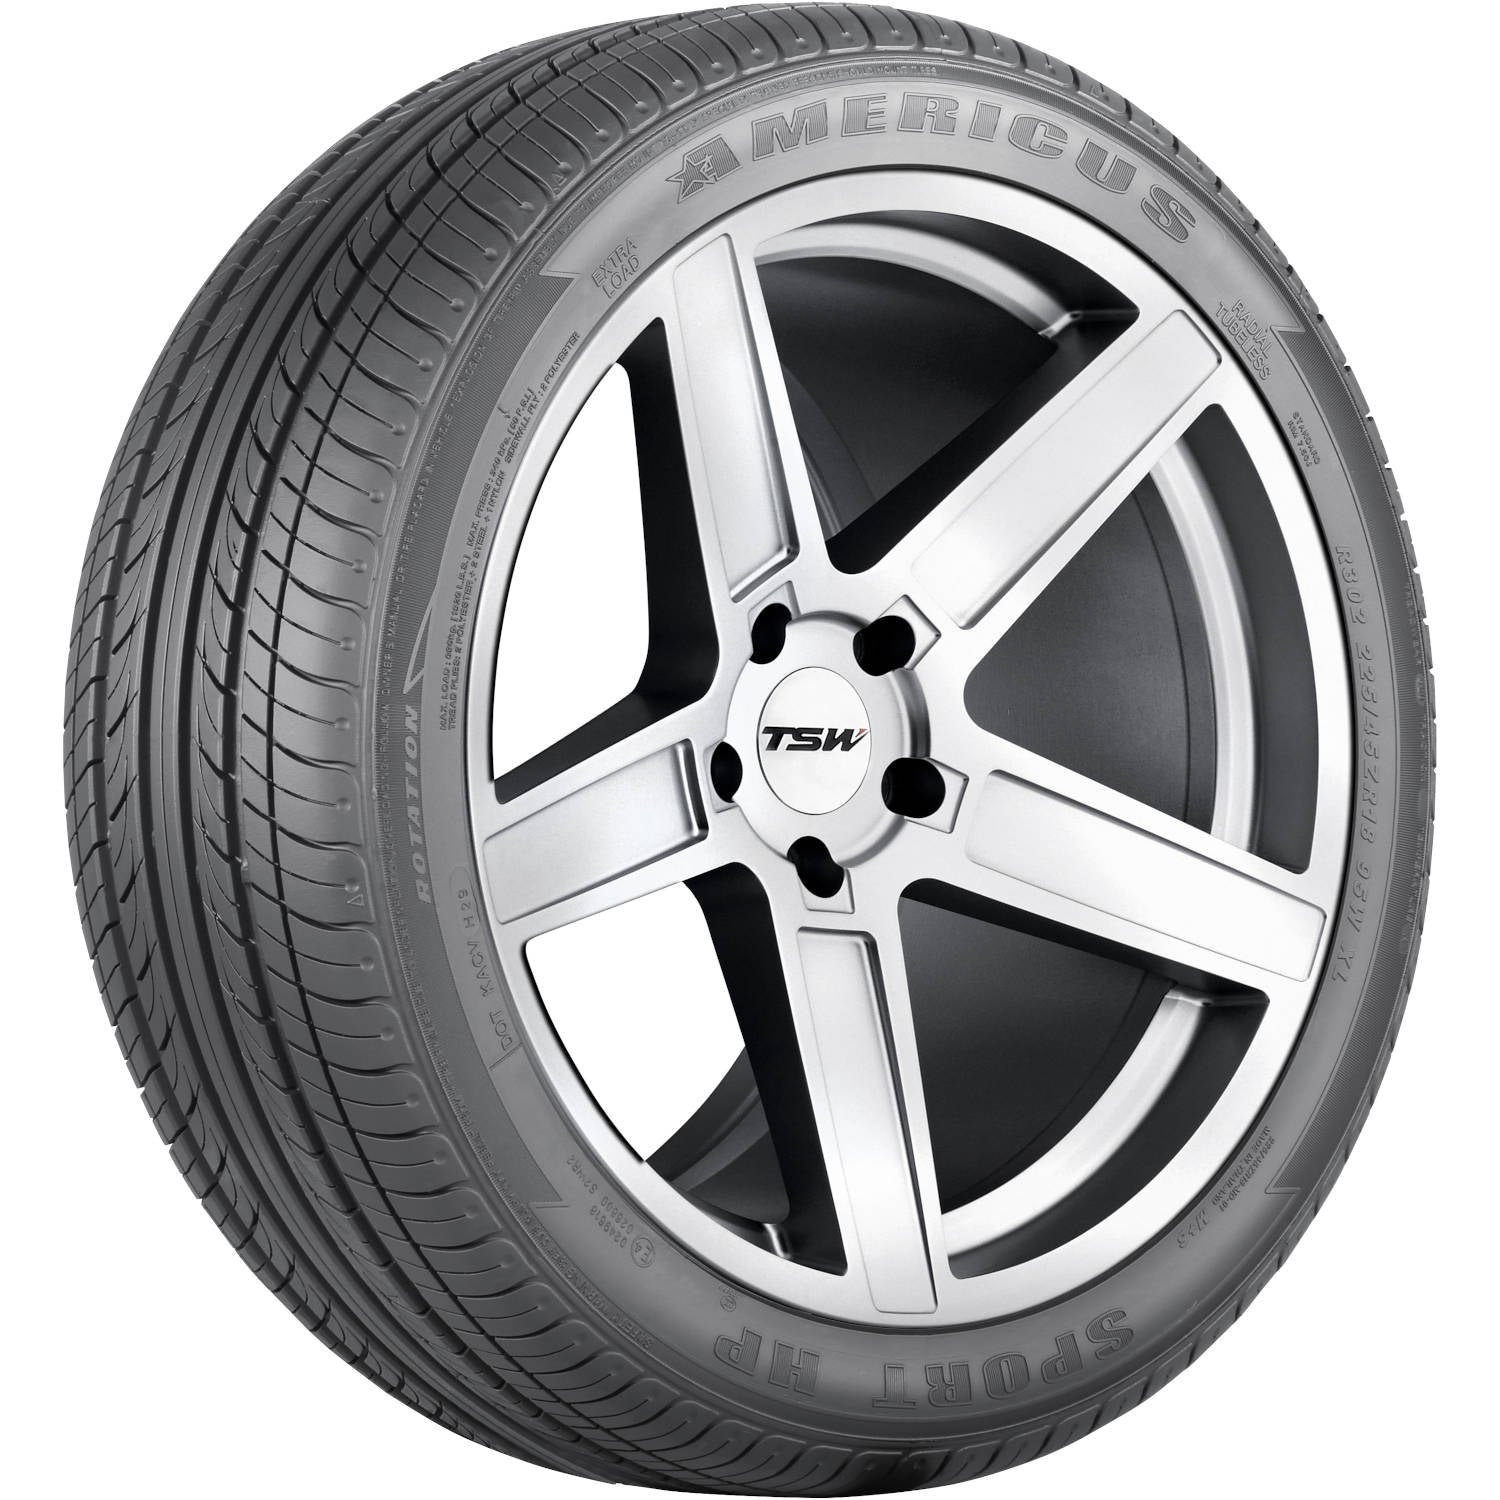 AMERICUS SPORT HP 215/50ZR17 (25.5X8.5R 17) Tires